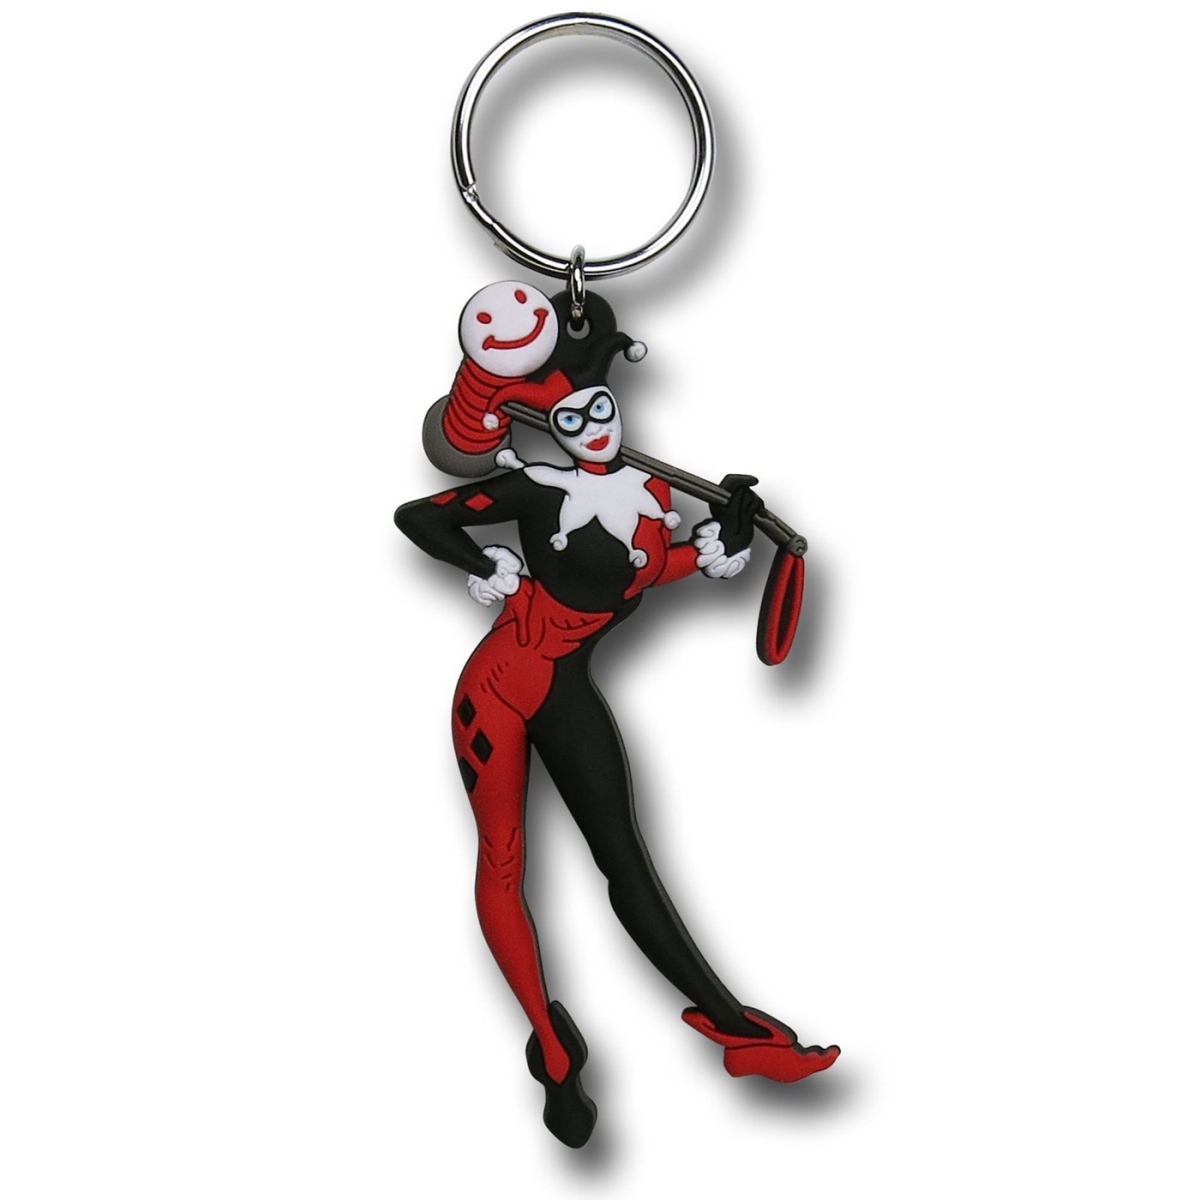 Picture of Harley Quinn keyhrlysftpvc Harley Quinn Soft Touch PVC Keychain